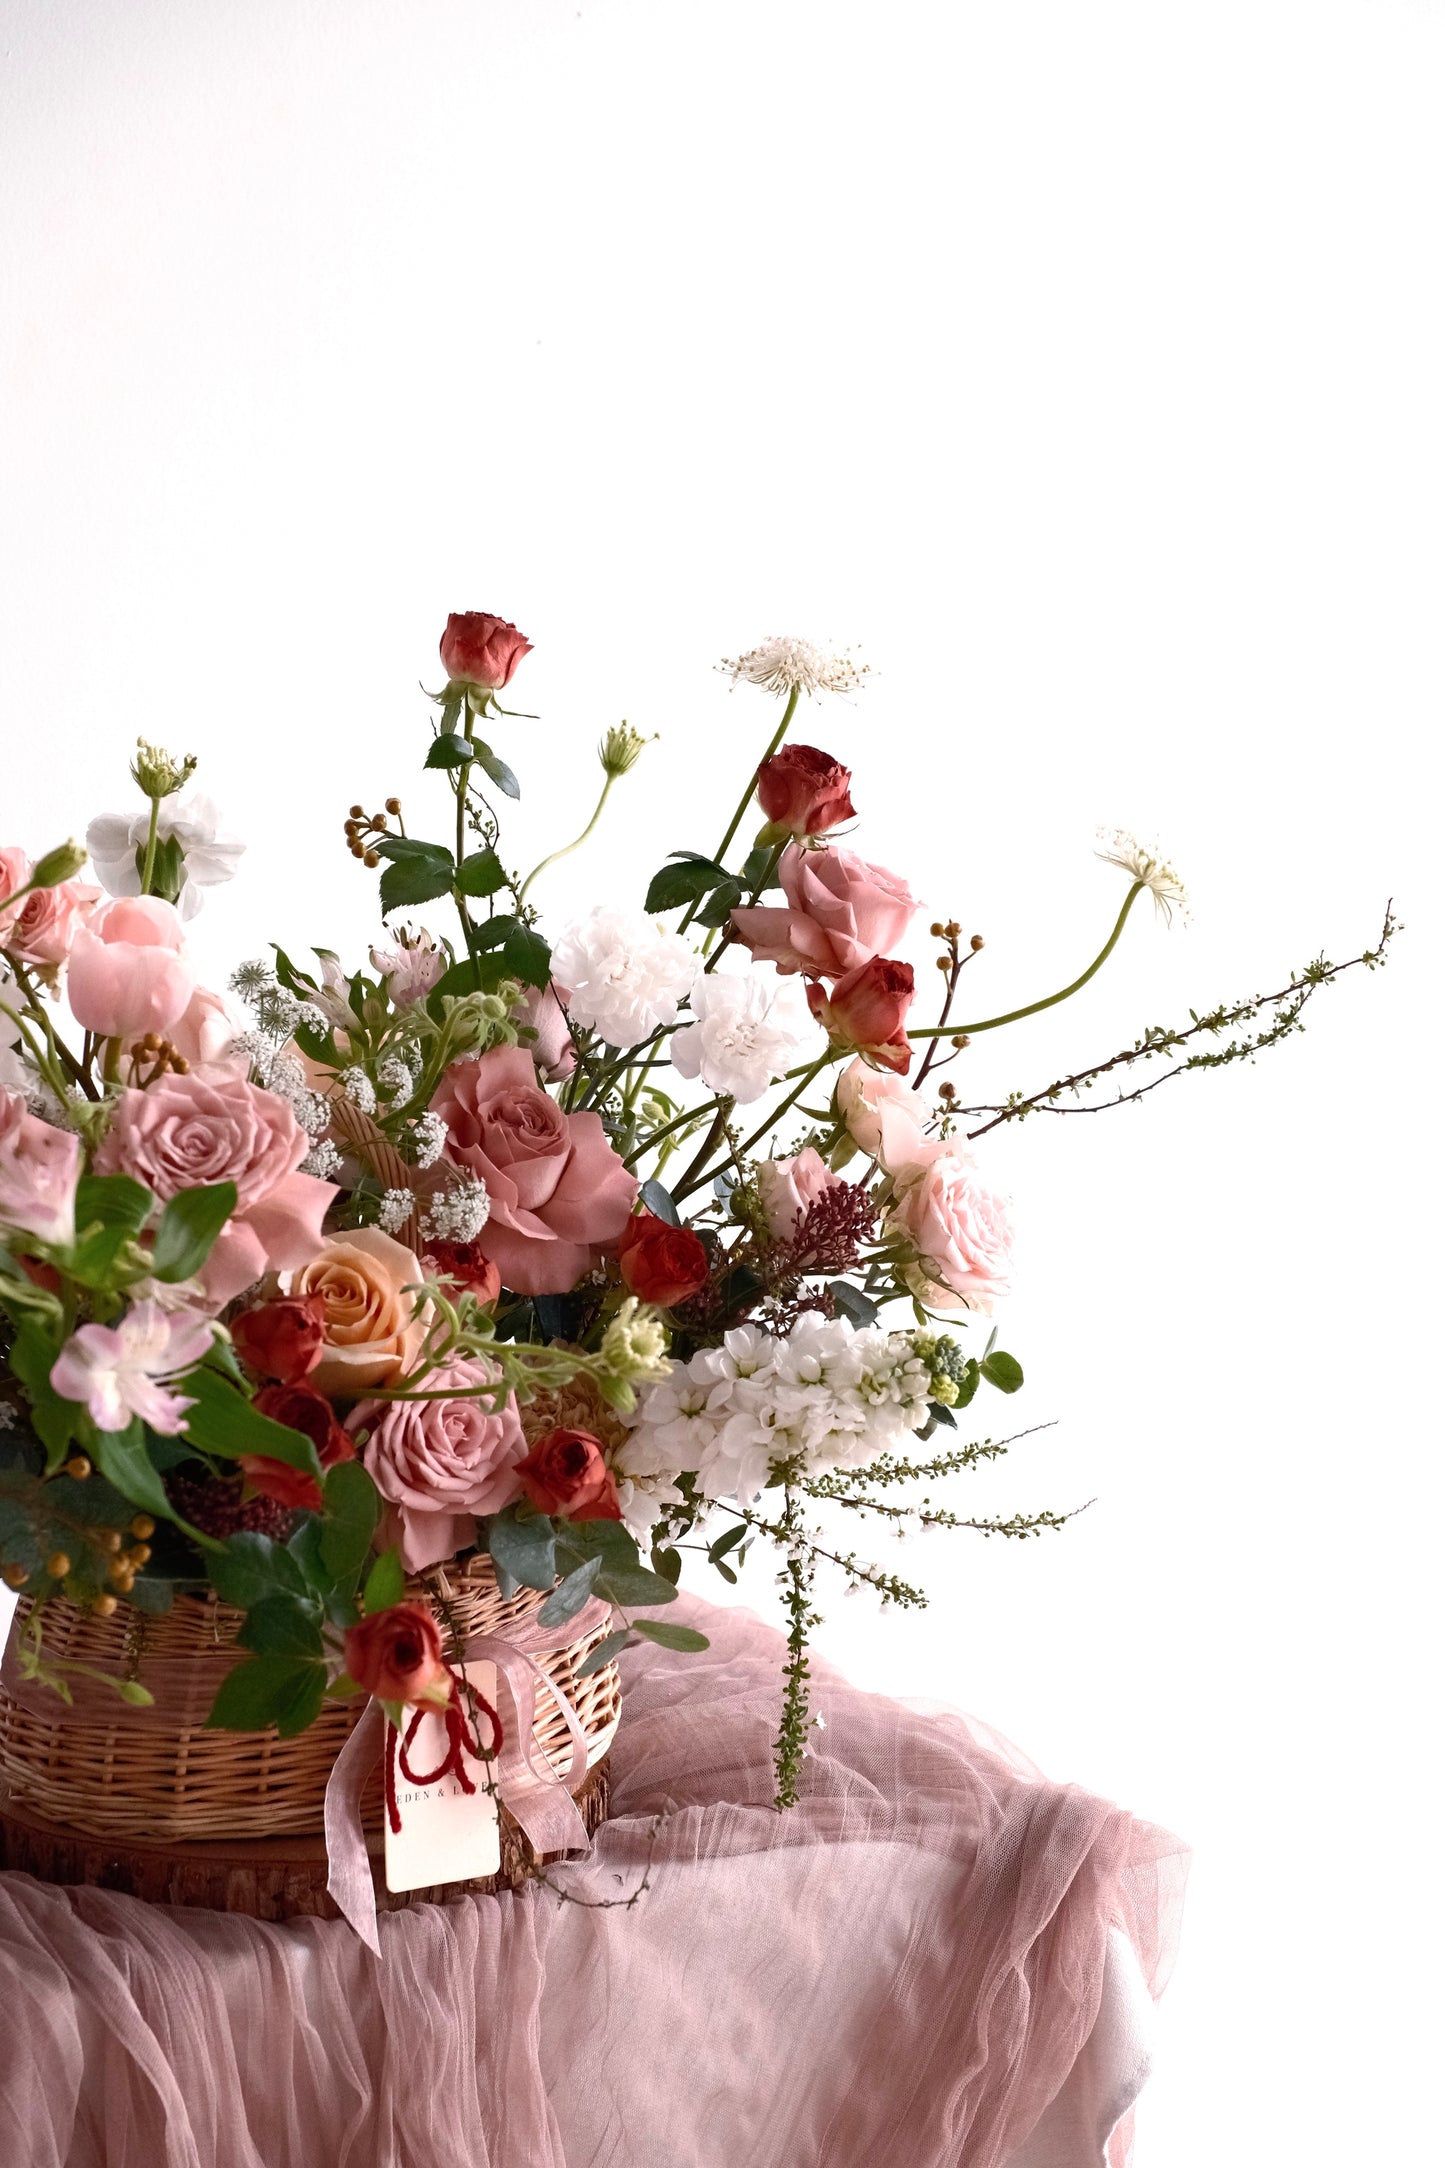 Cappuccino Rose Flower Basket